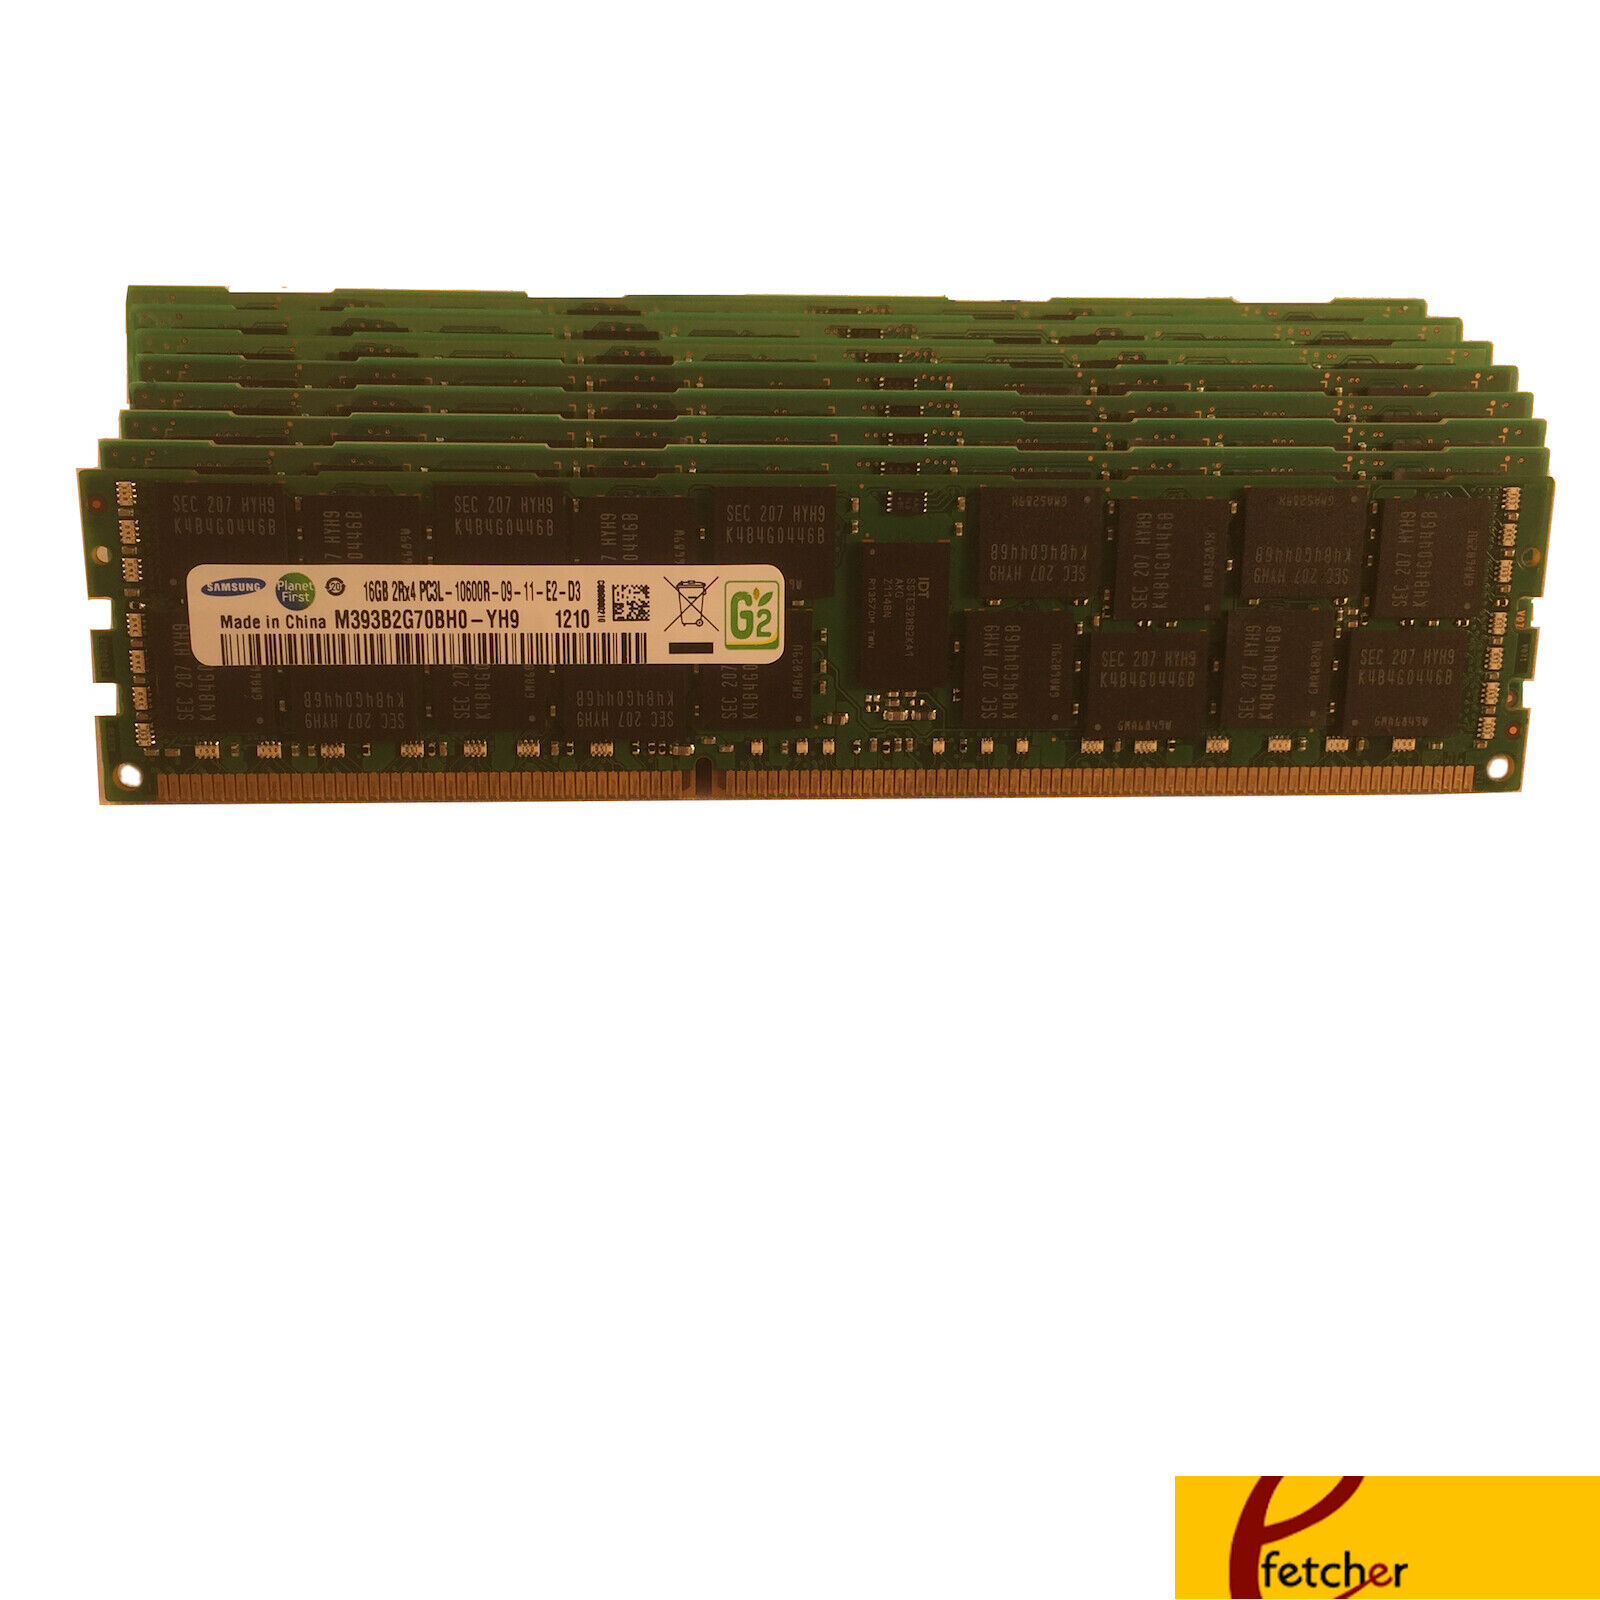 256GB (16 x 16GB) PC3-10600R DDR3 1333 ECC Reg Server Memory RAM DIMM Upgrade